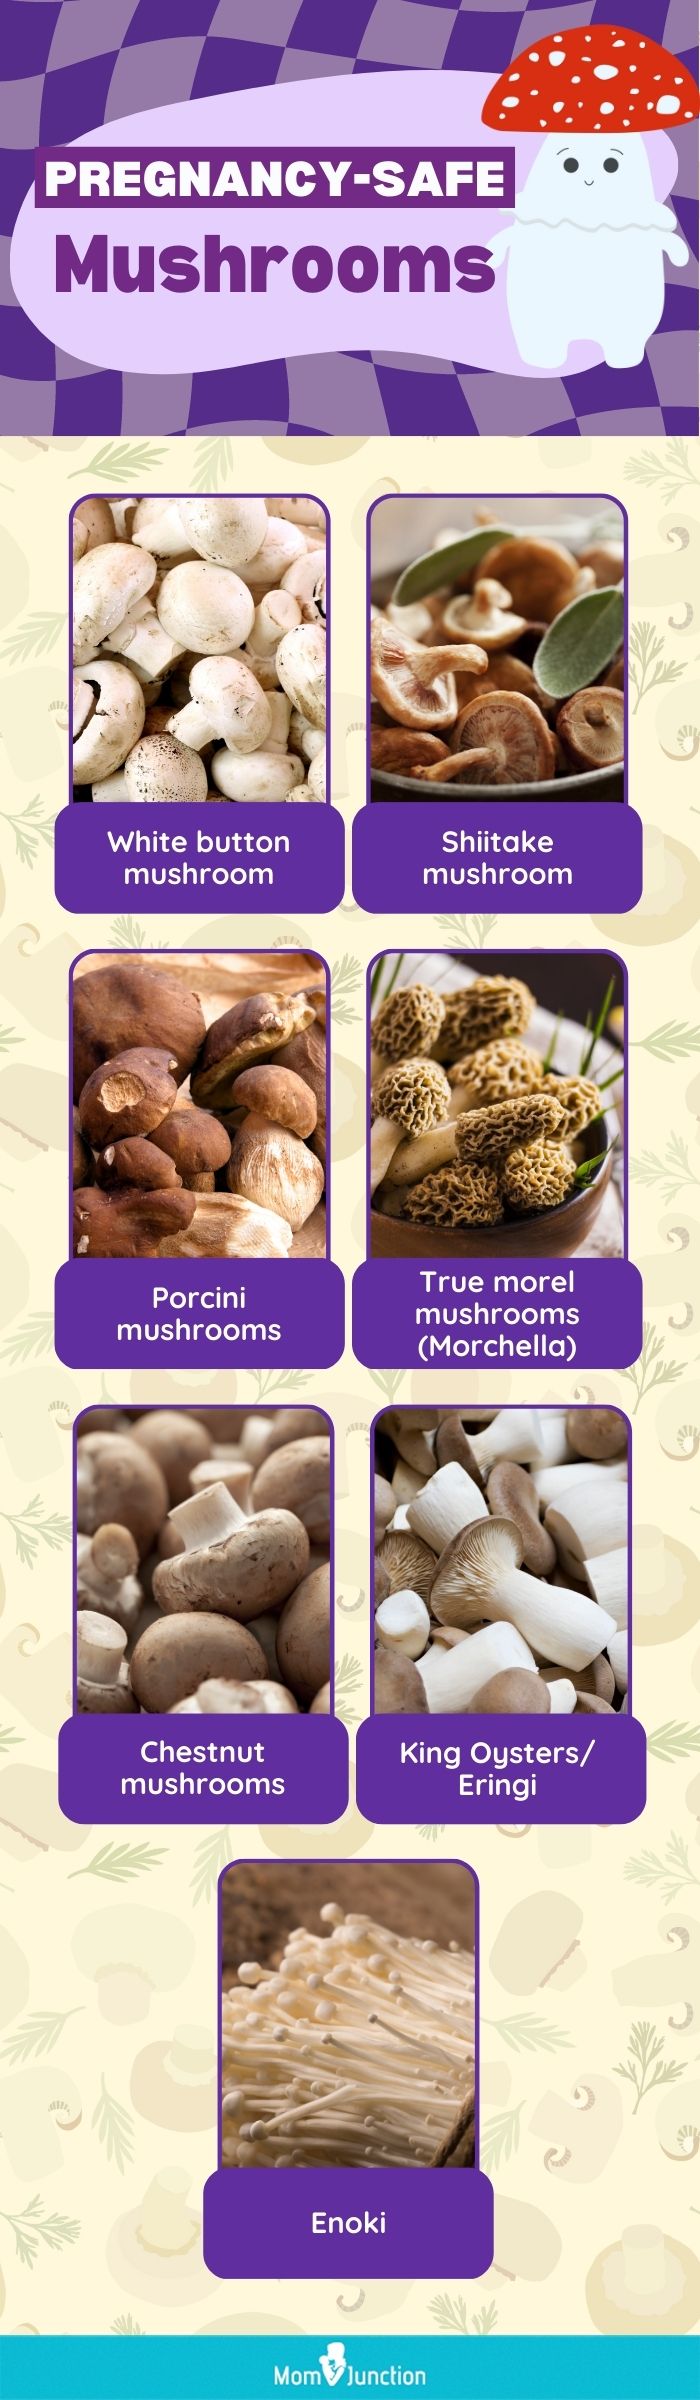 pregnancy safe mushrooms (infographic)